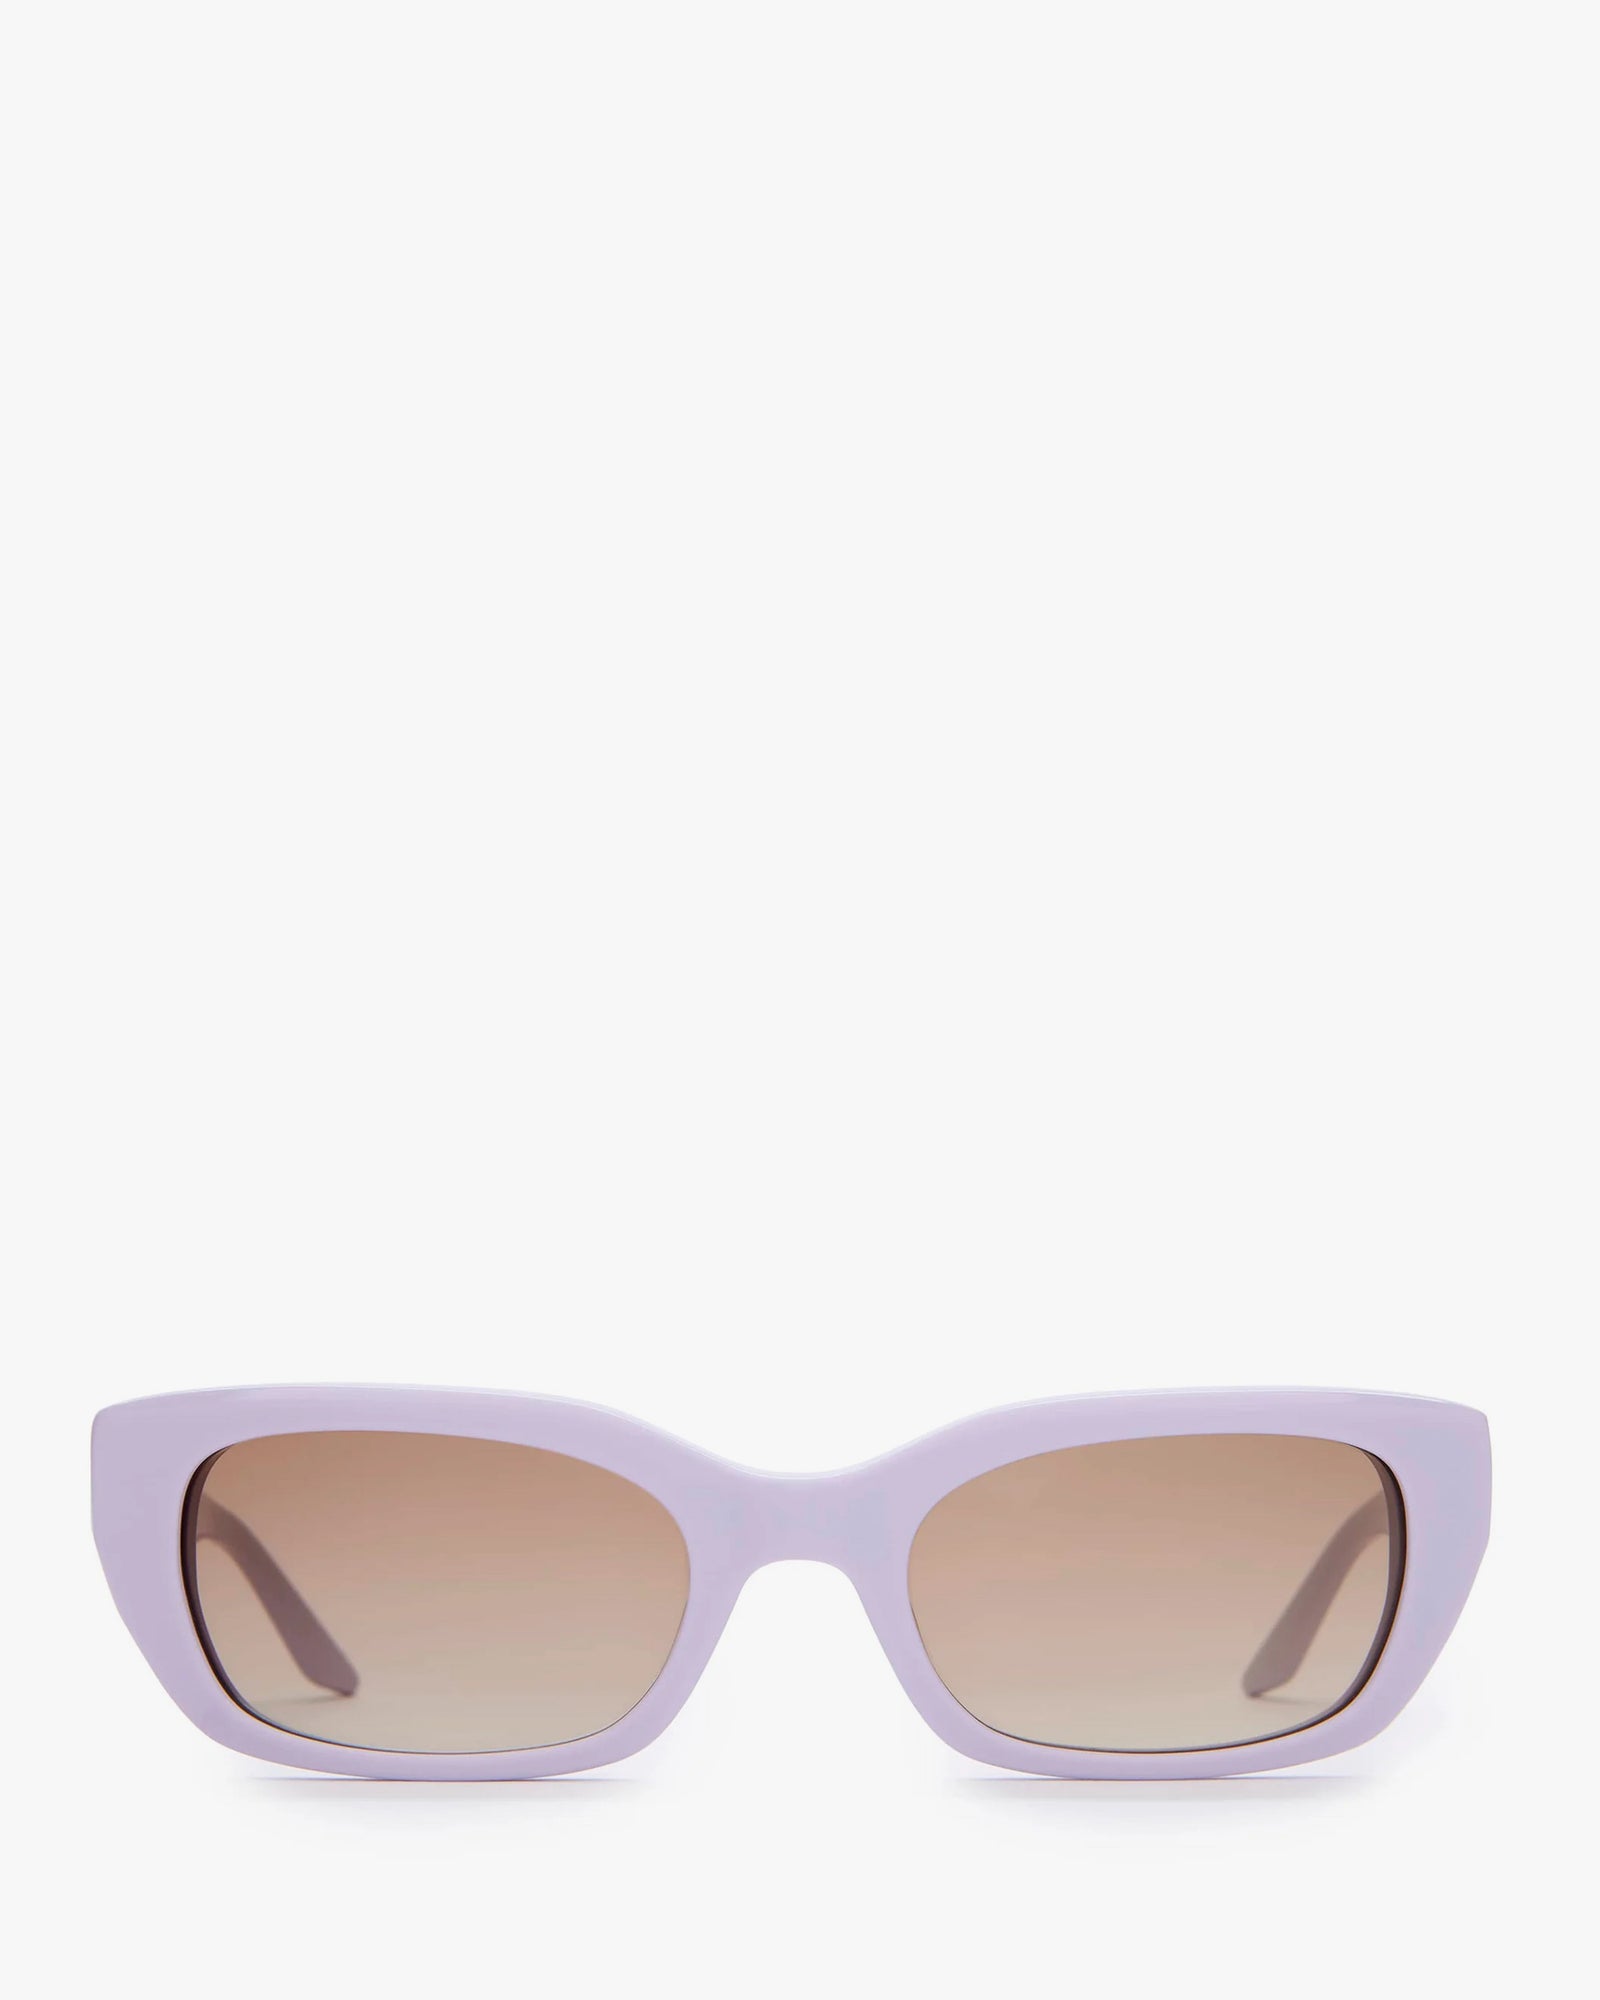 Lavender Milk Gothic Breeze Sunglasses from CRAP Eyewear